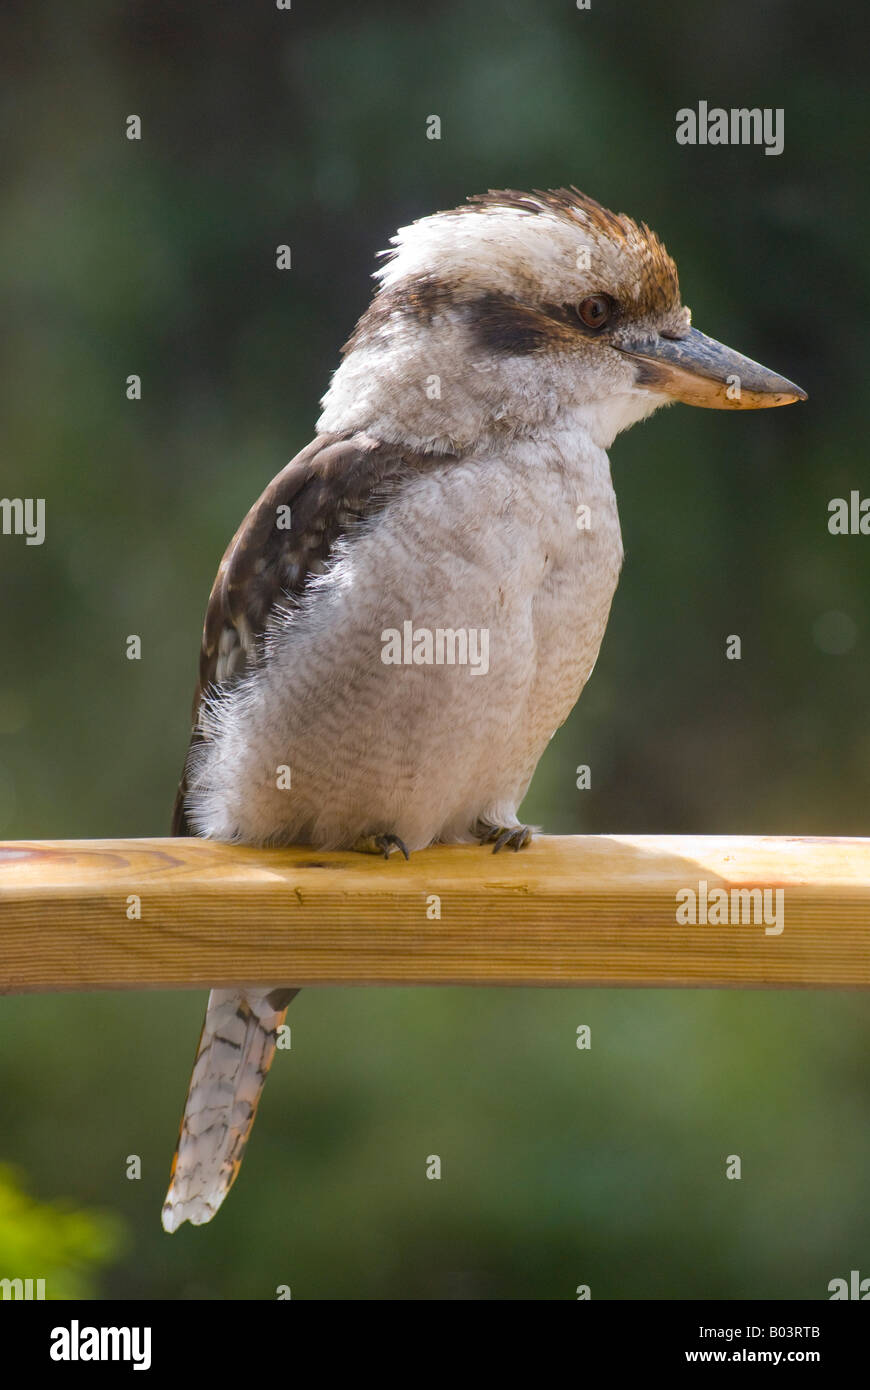 Juvenile kookaburra Stock Photo